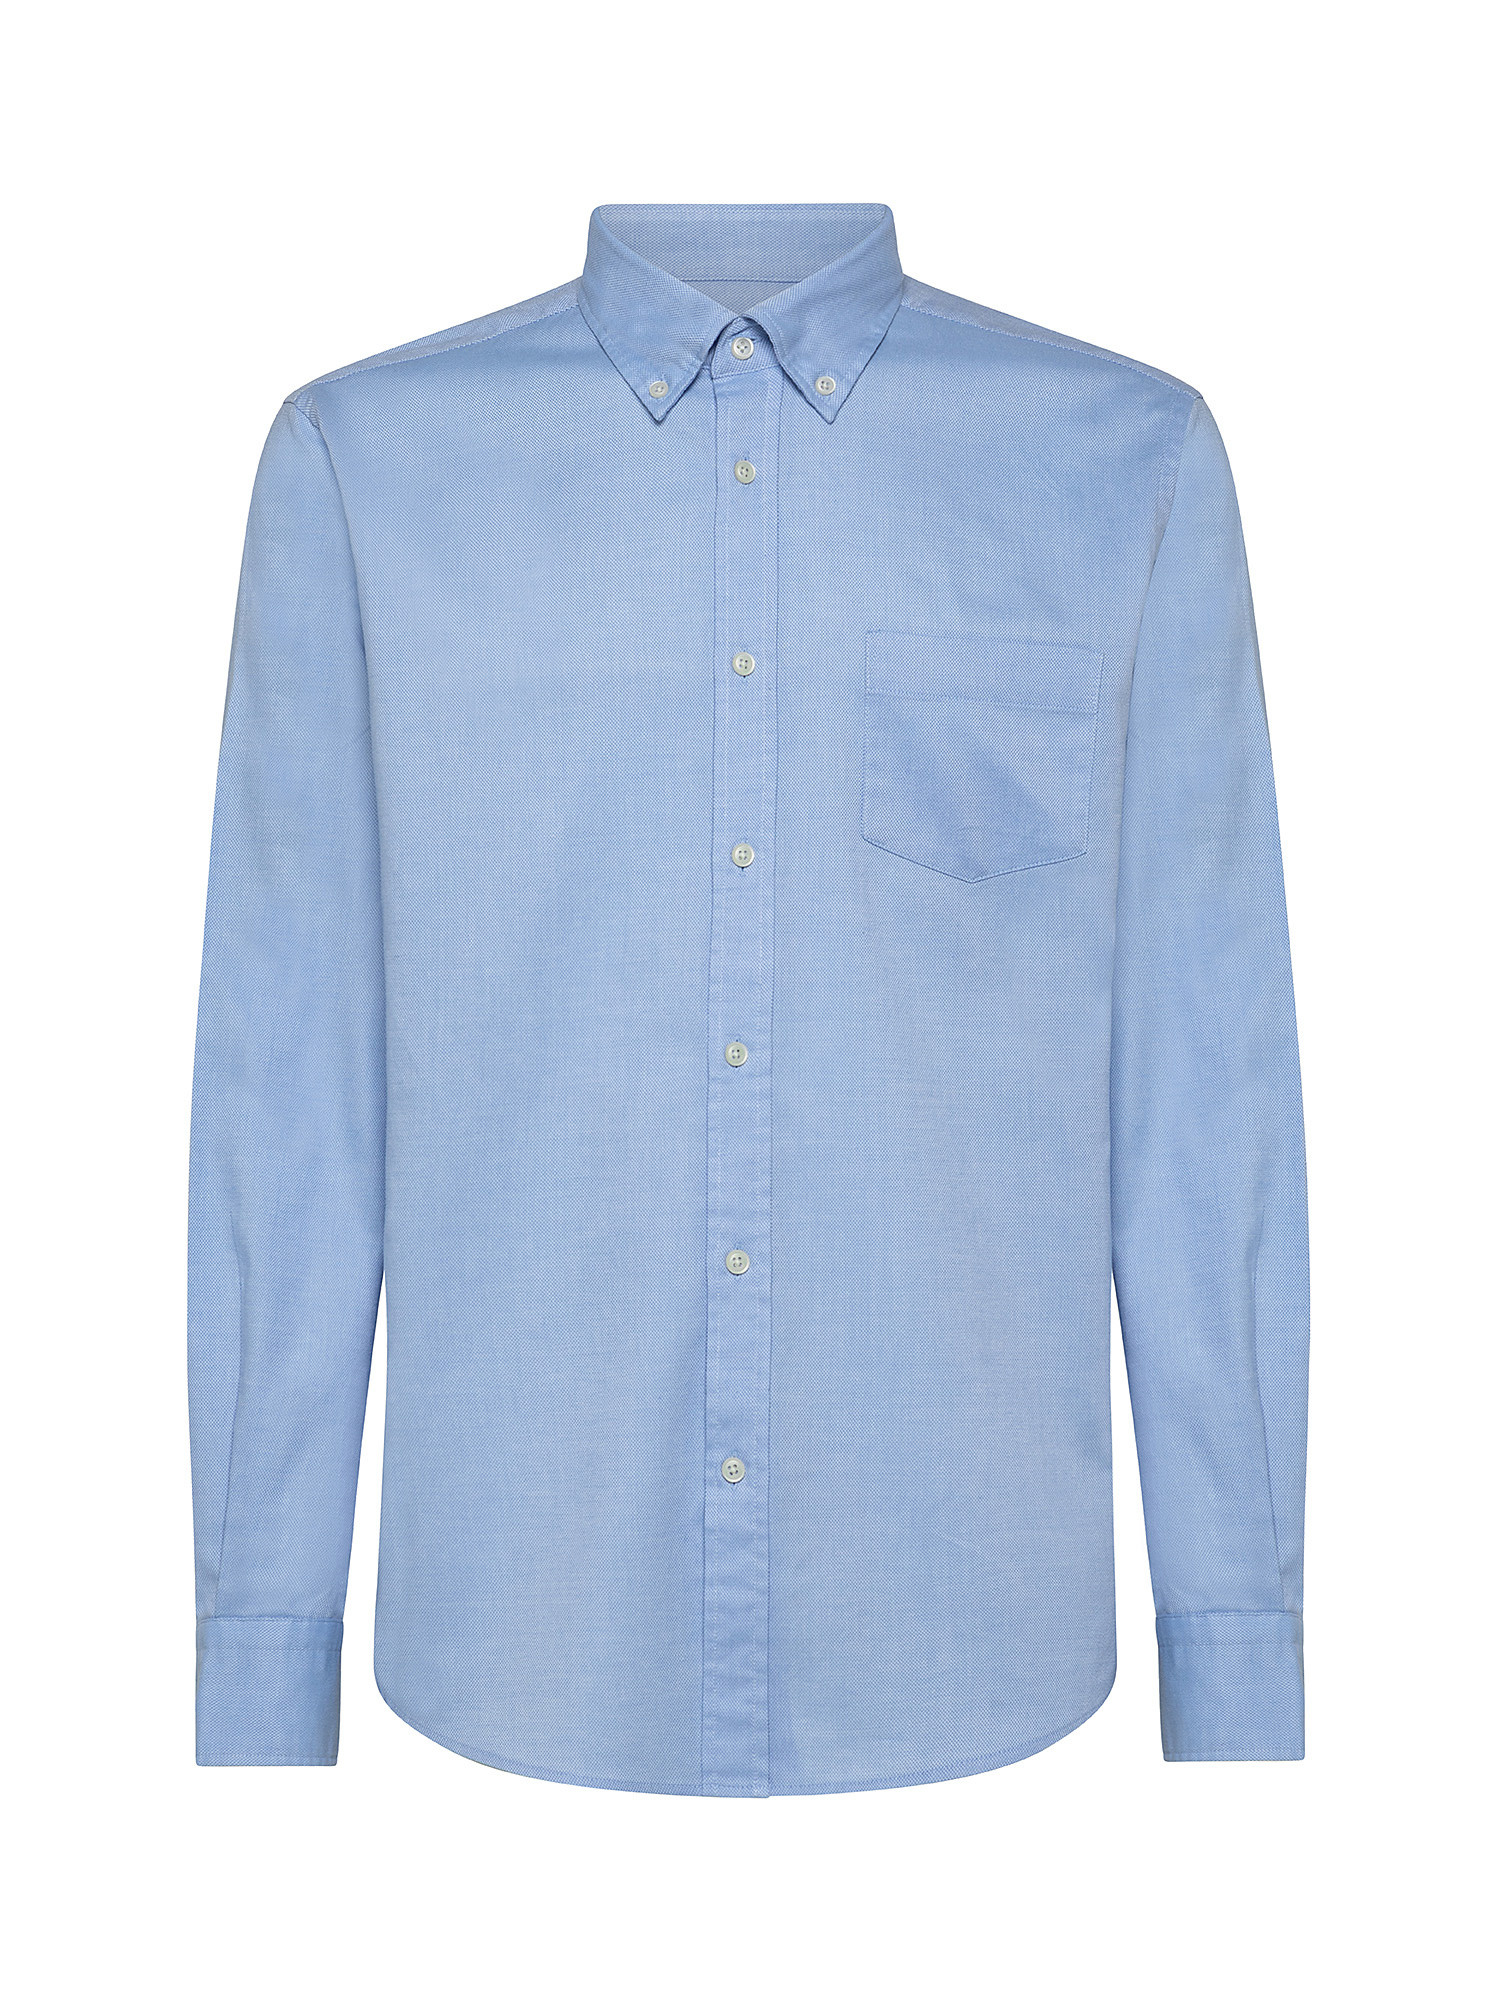 Camicia tailor fit natural stretch, Azzurro, large